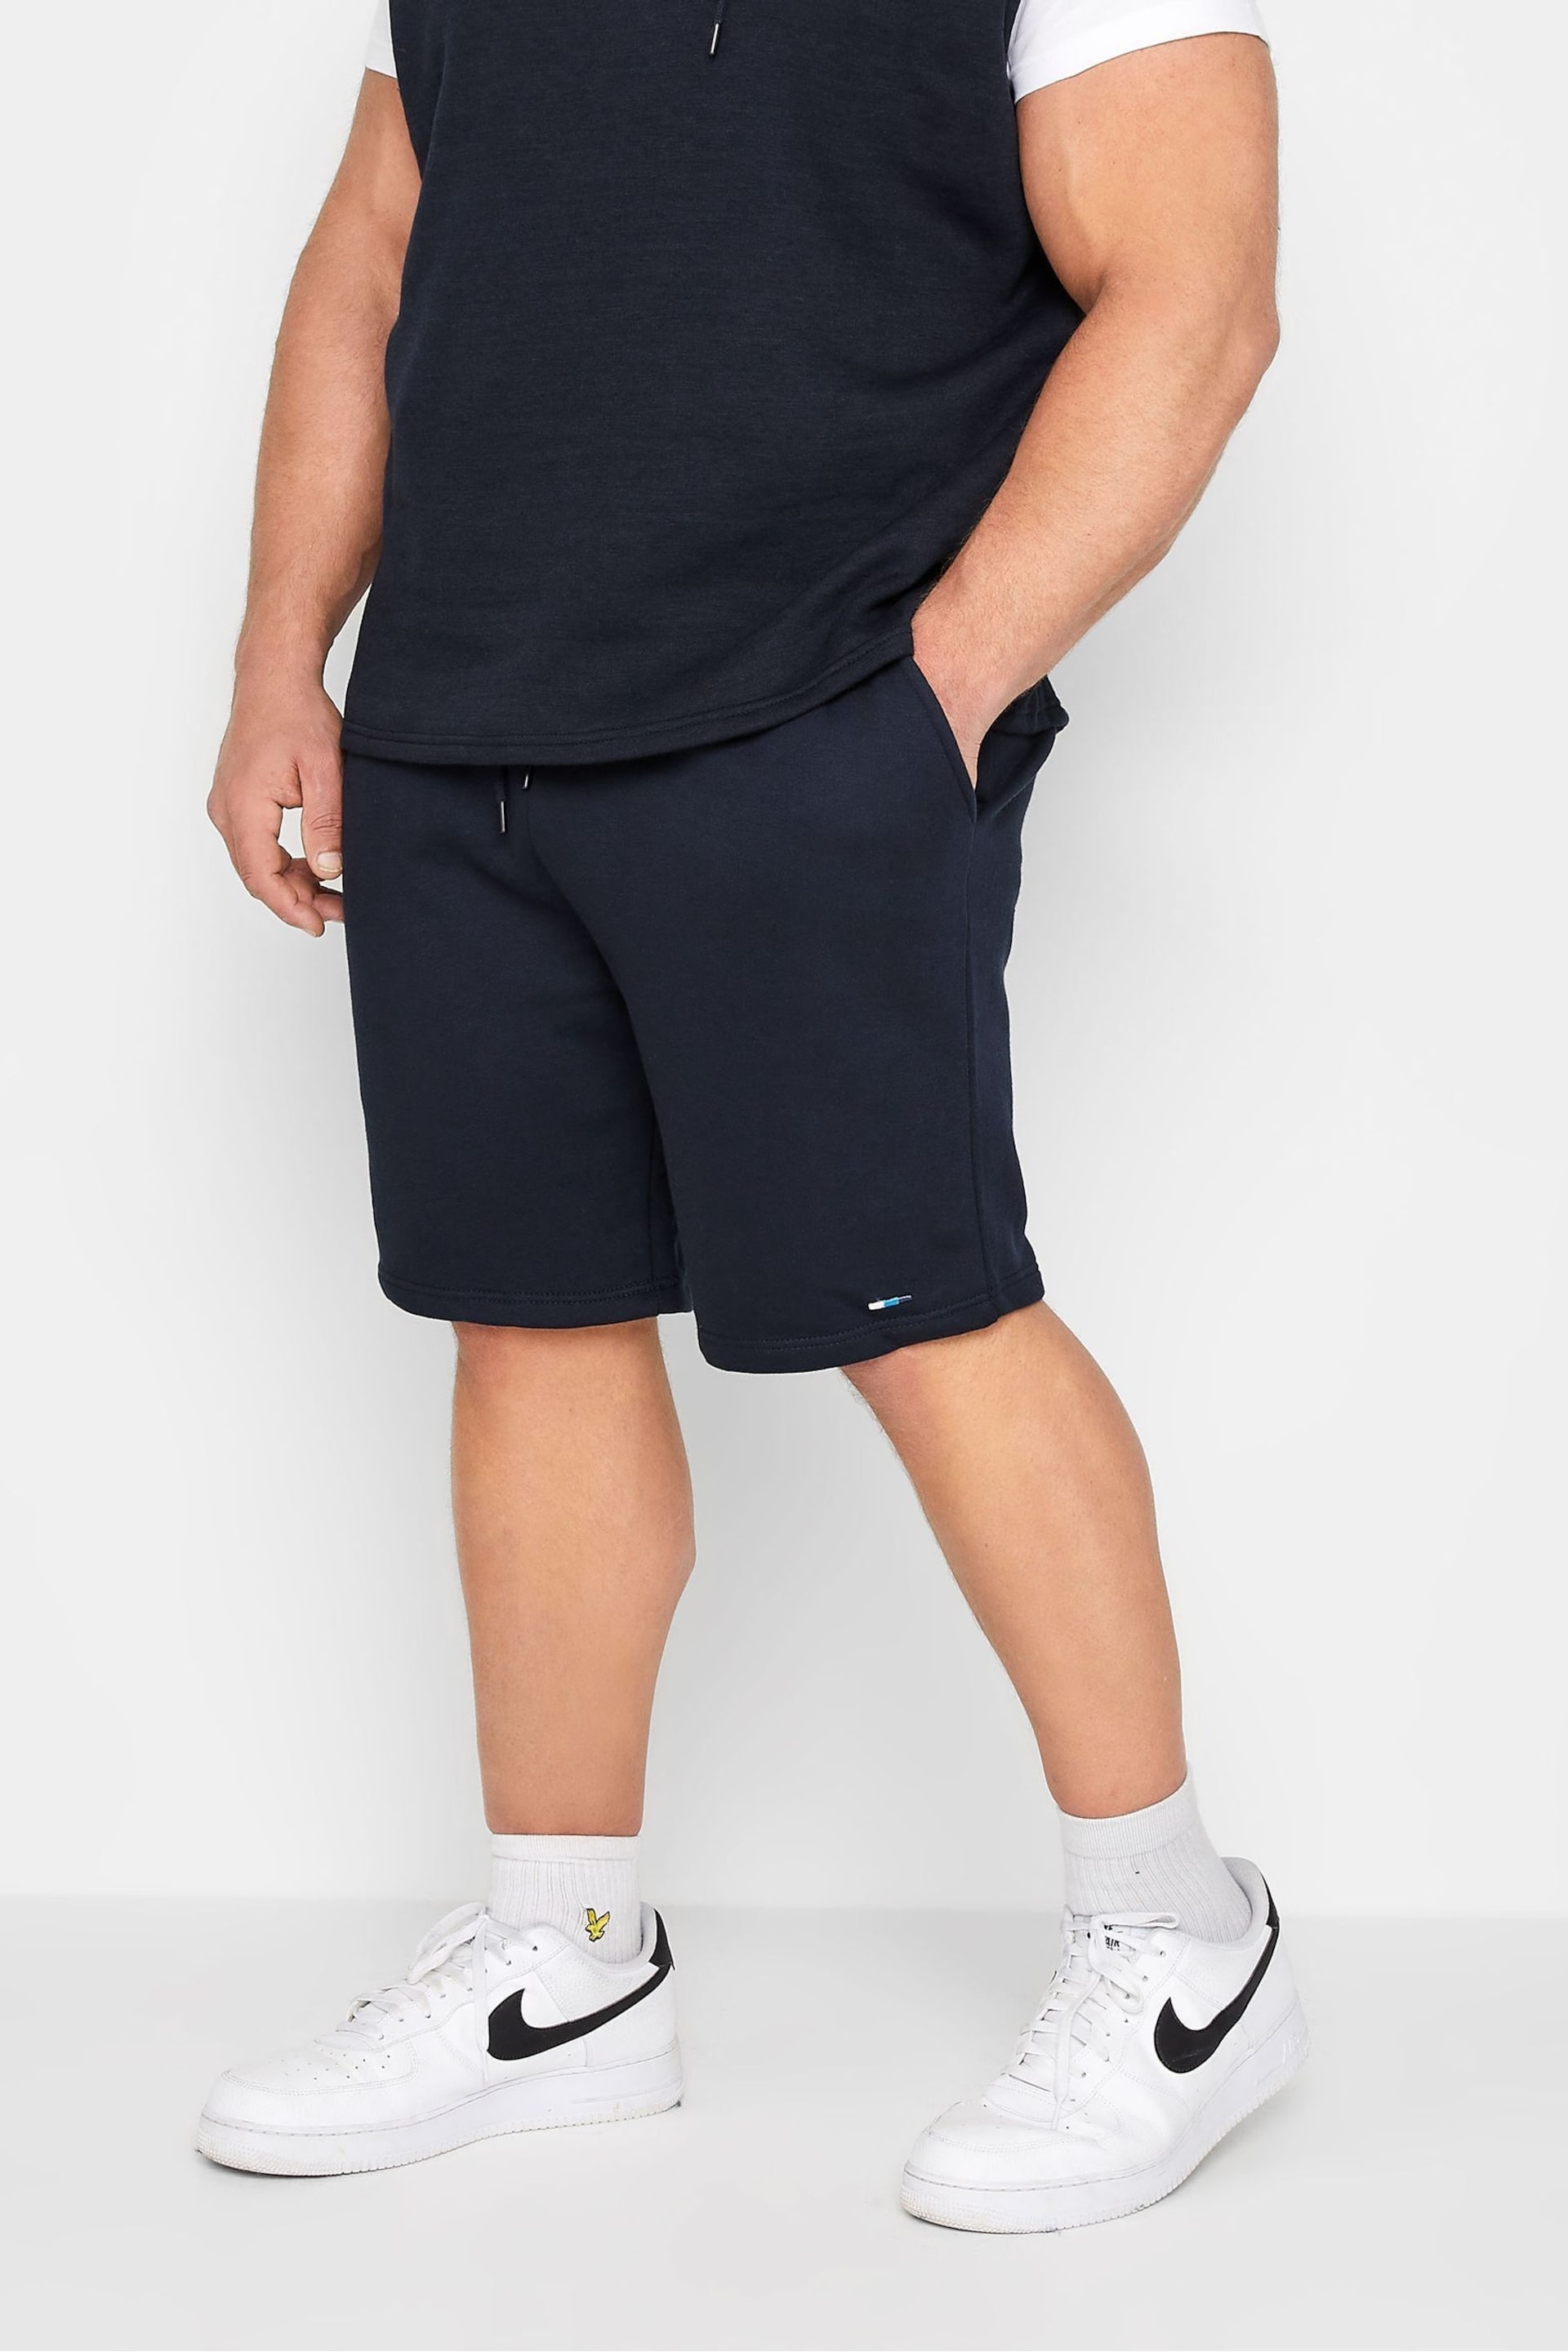 BadRhino Big & Tall Blue Jersey Shorts - Image 1 of 3